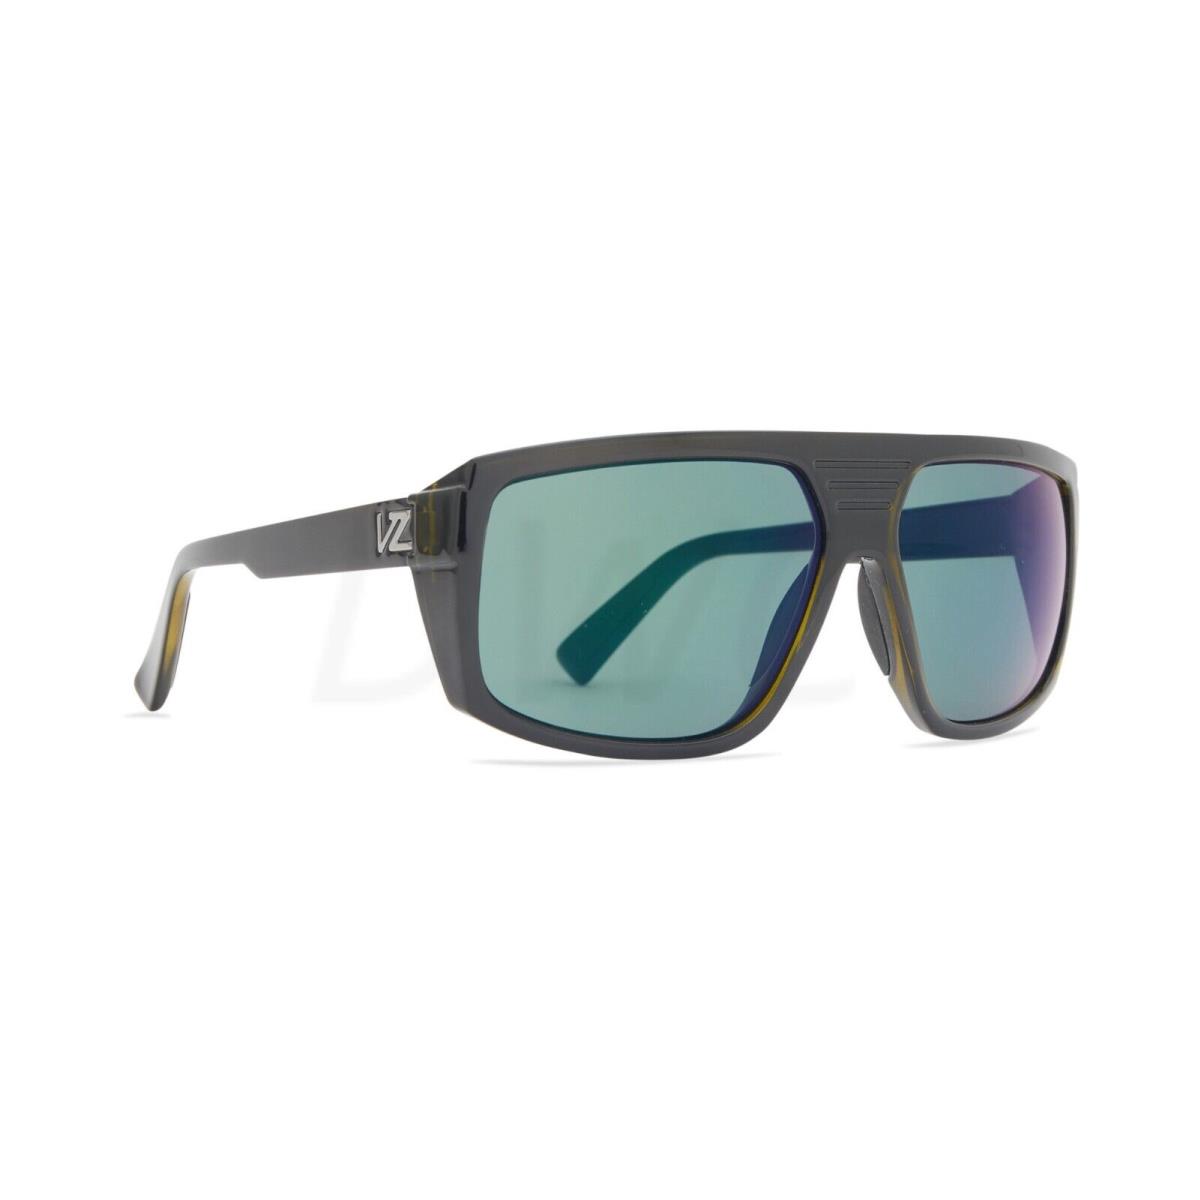 Vonzipper Quazzi Sunglasses Olive Trans Gloss/grn Blu Chrm AZYEY00126-XGGB - Frame: Black, Lens: